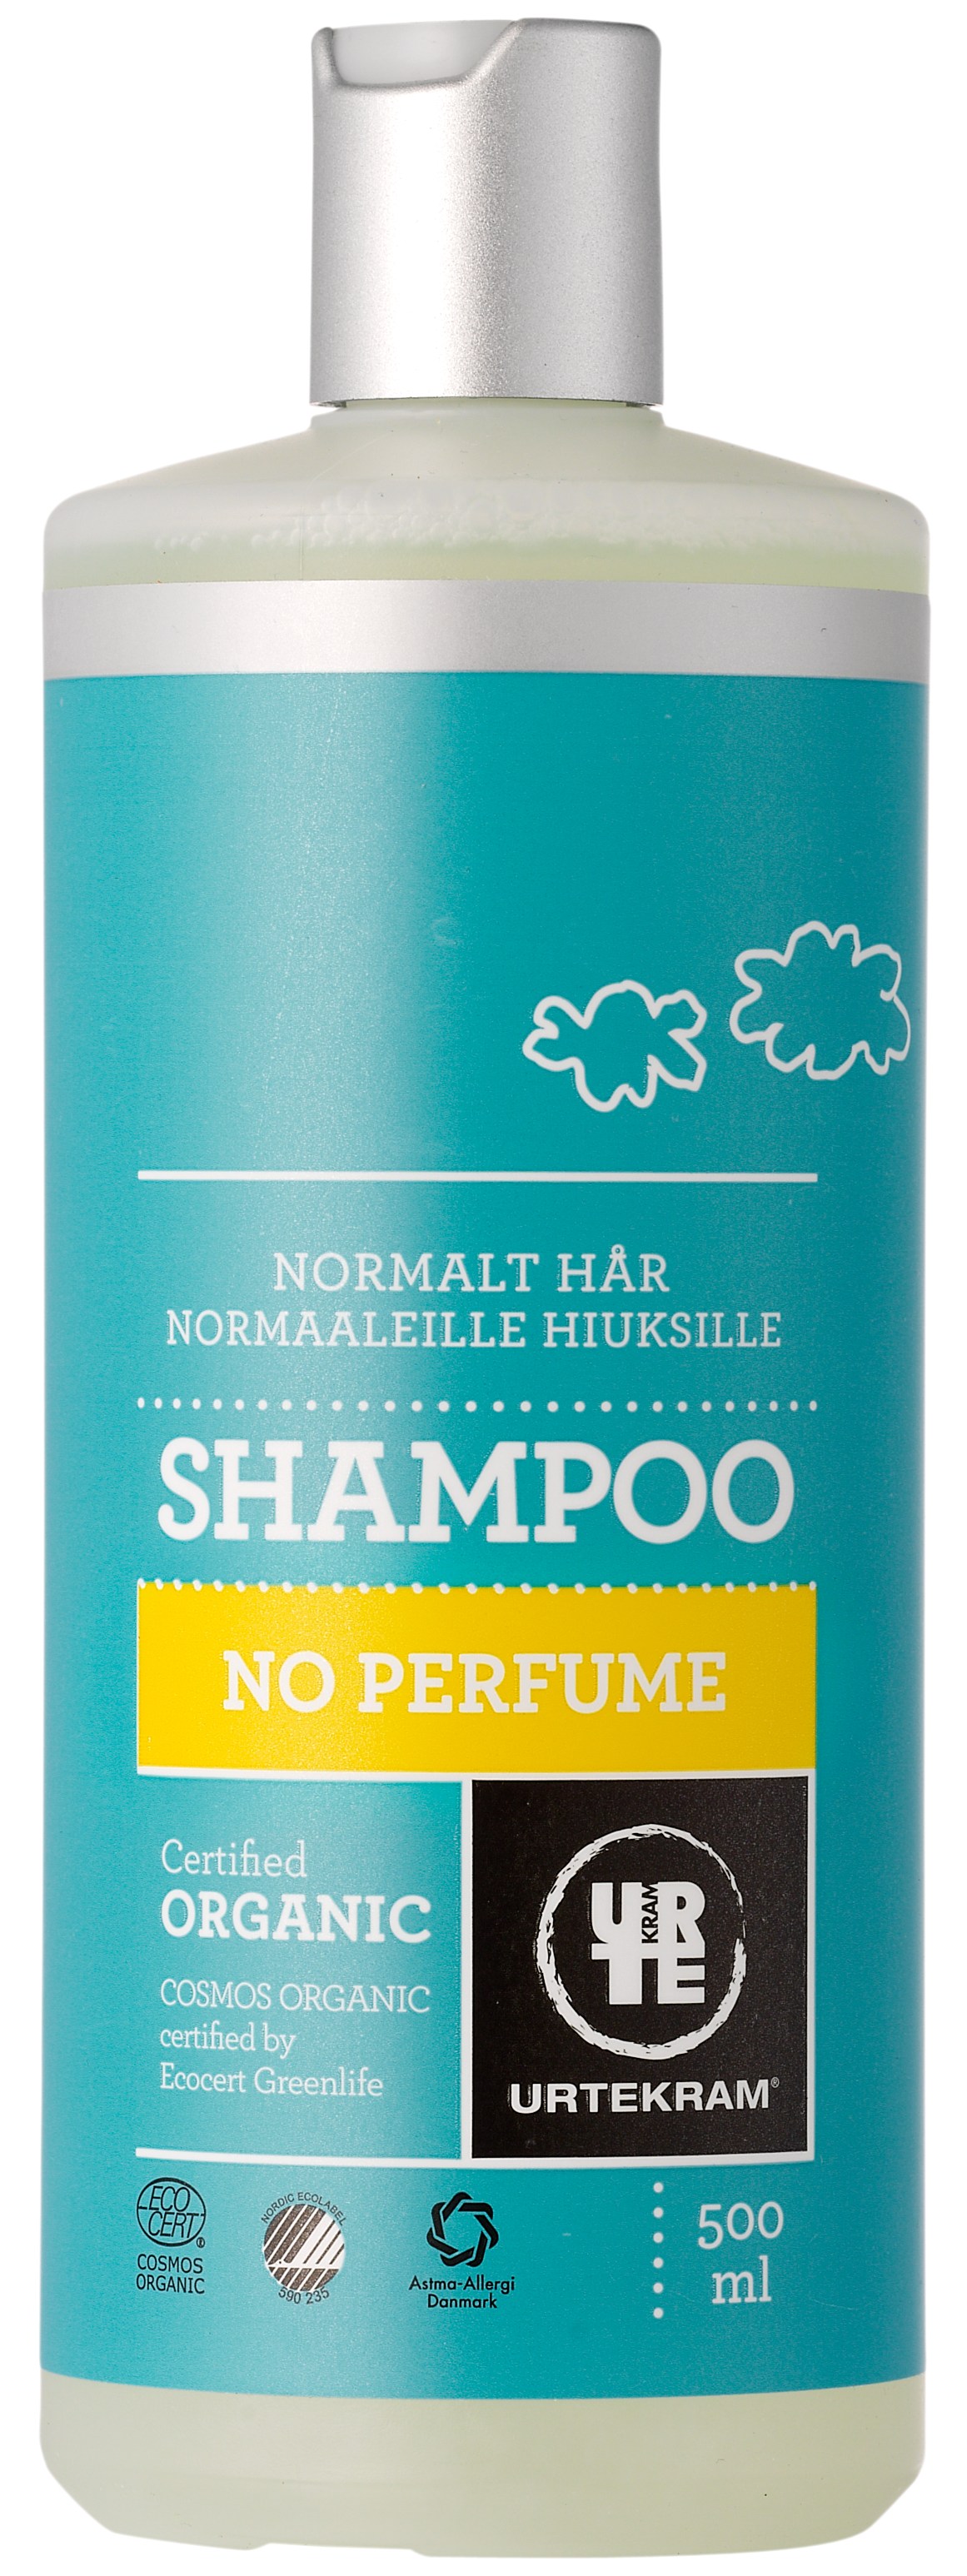 Urtekram No Perfume Shampoo 500ml